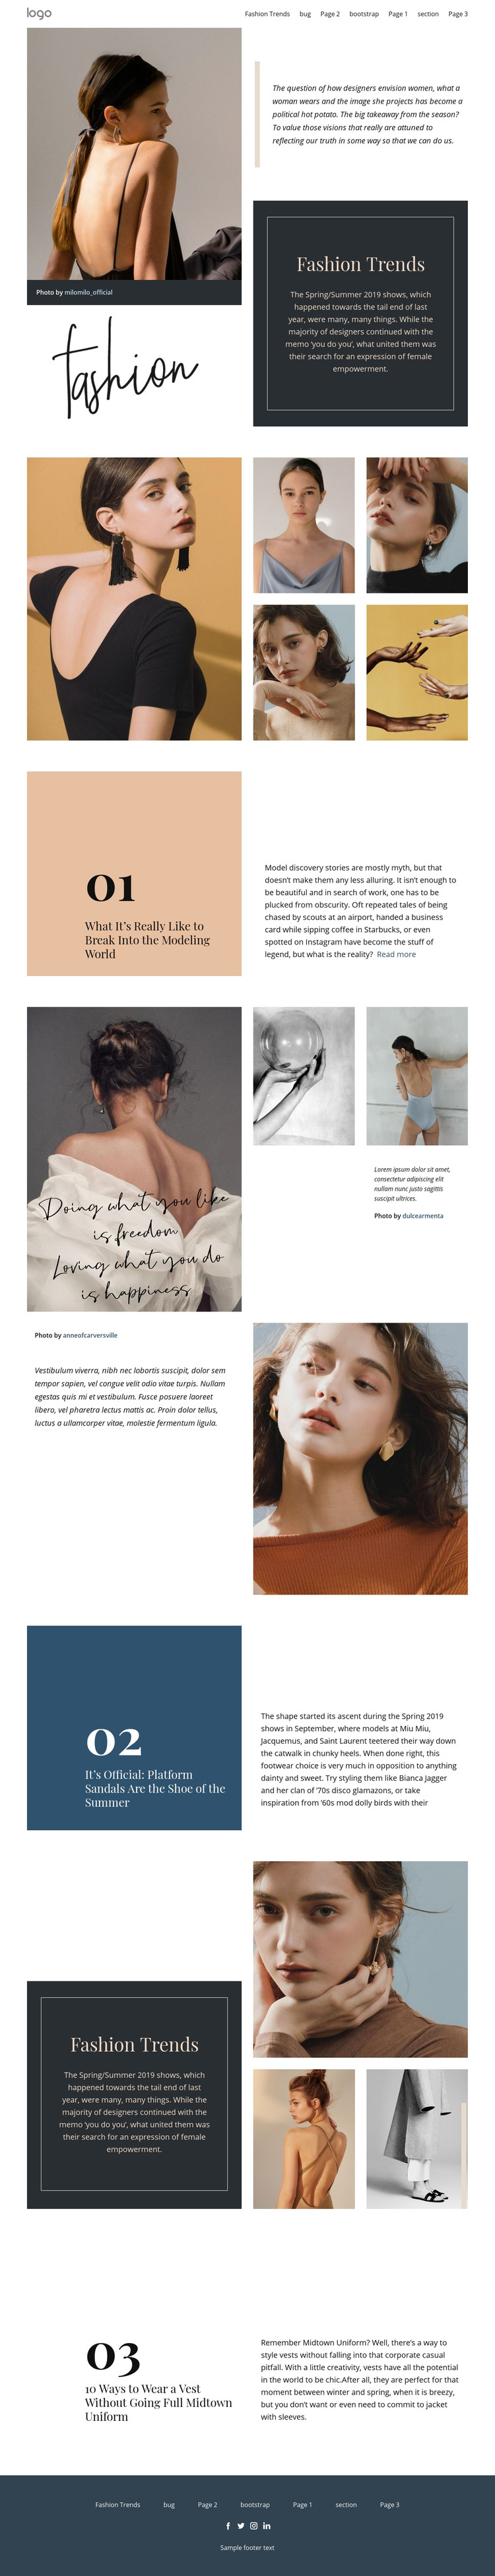 Designer vision of fashion Homepage Design